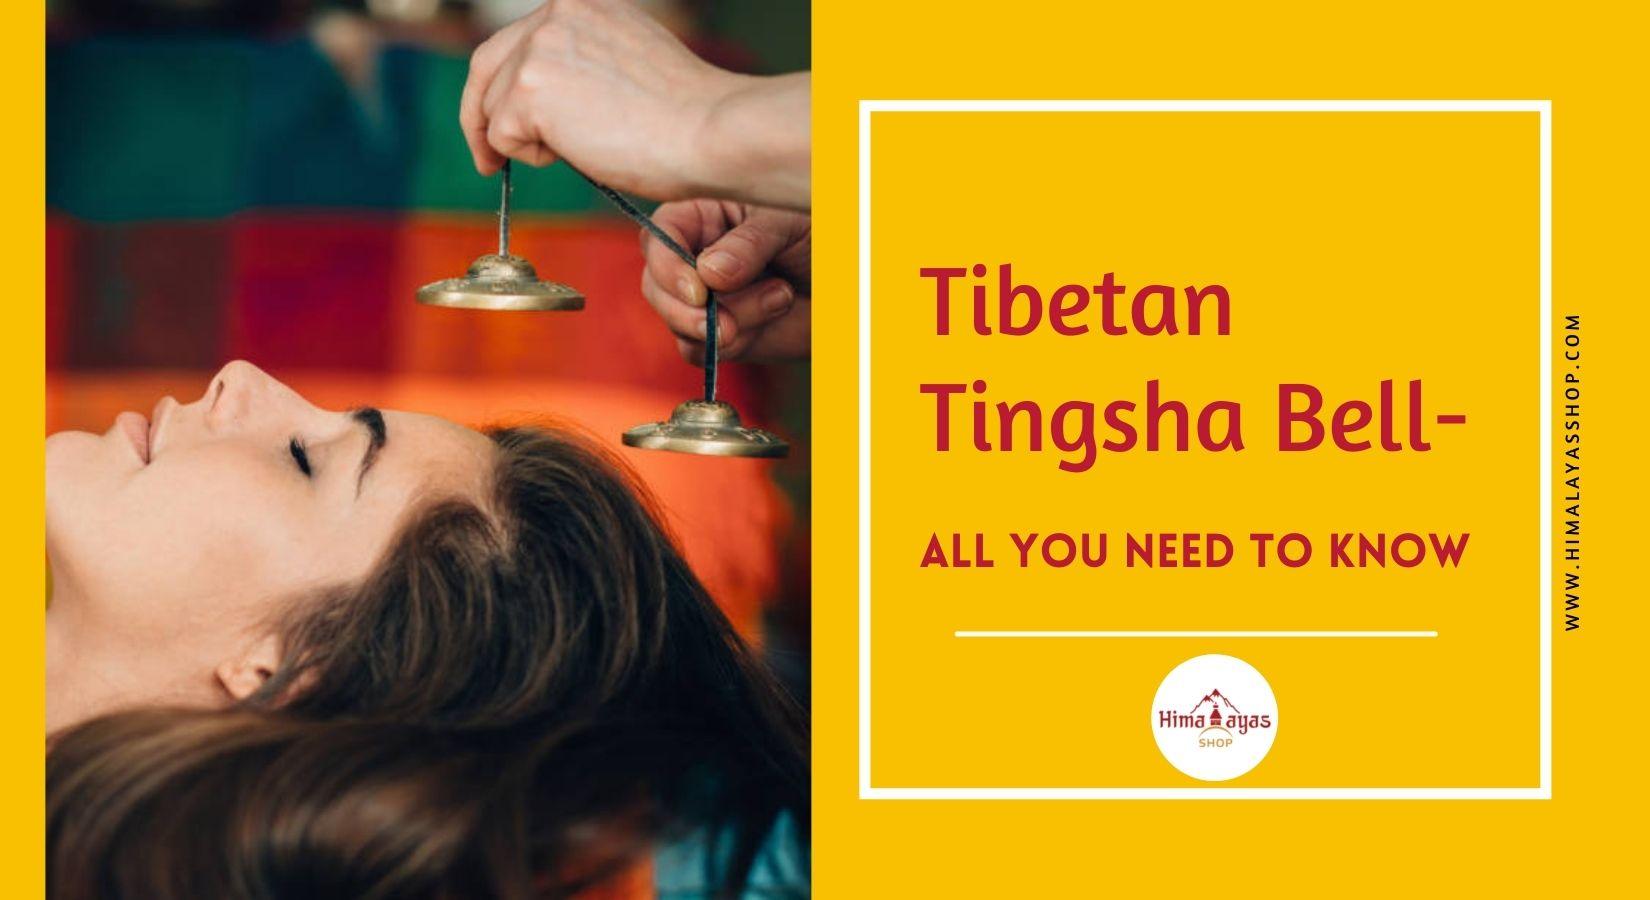 Tibetan Pure Handmade 7 metals Bell for meditation, yoga and craving